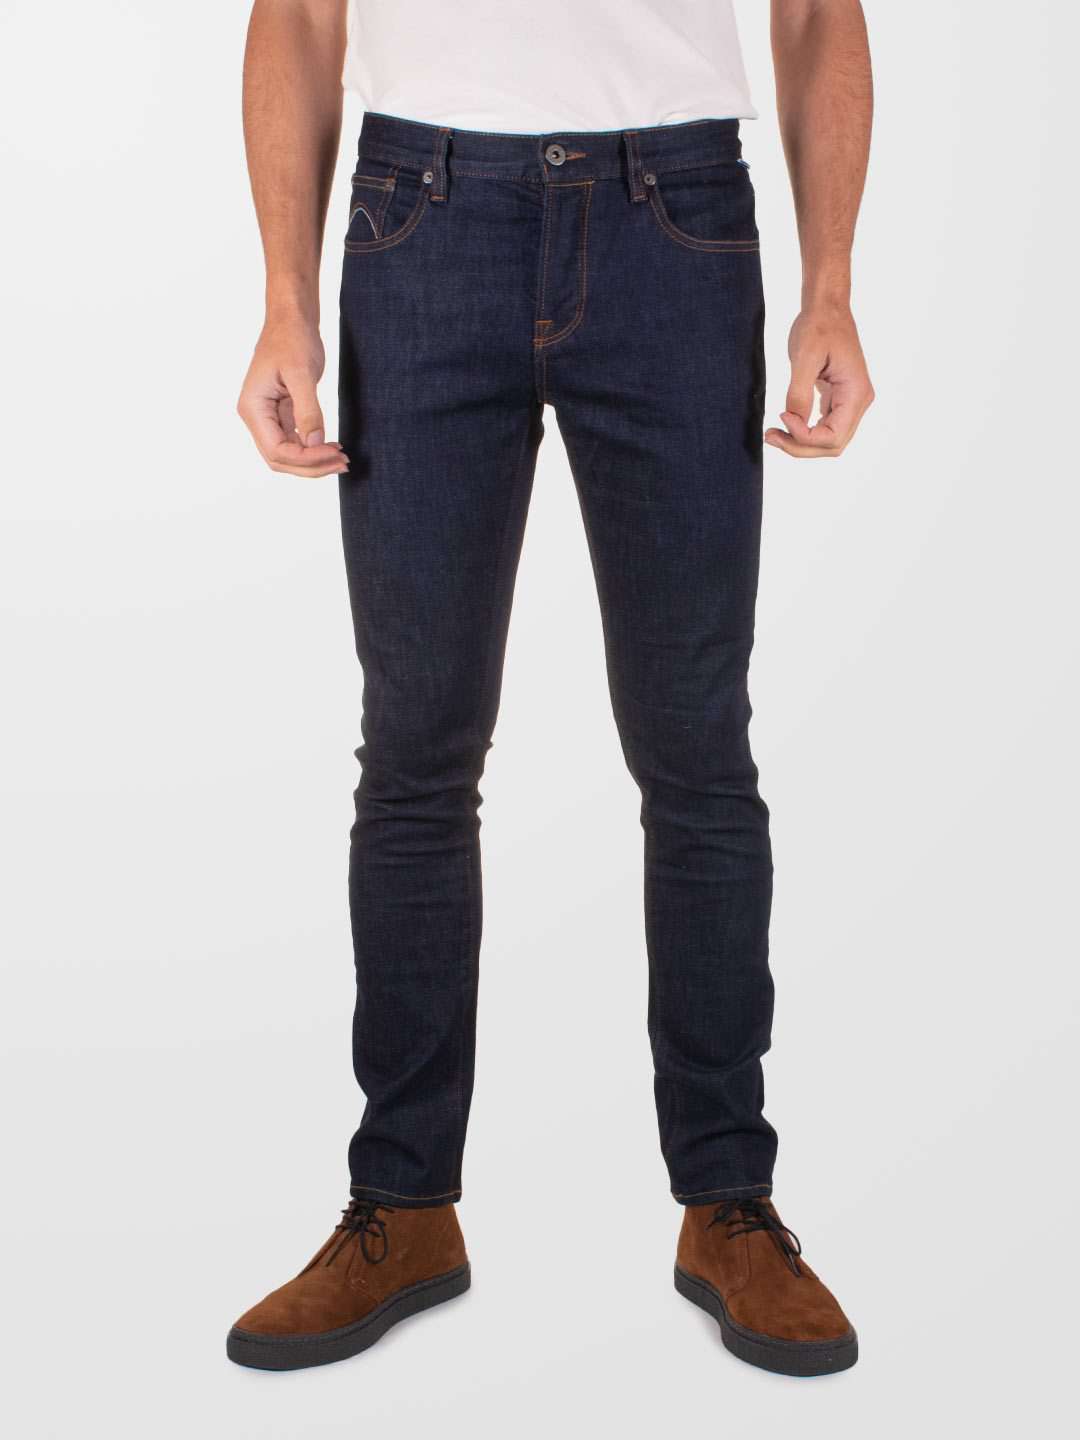 men's dark distressed jeans